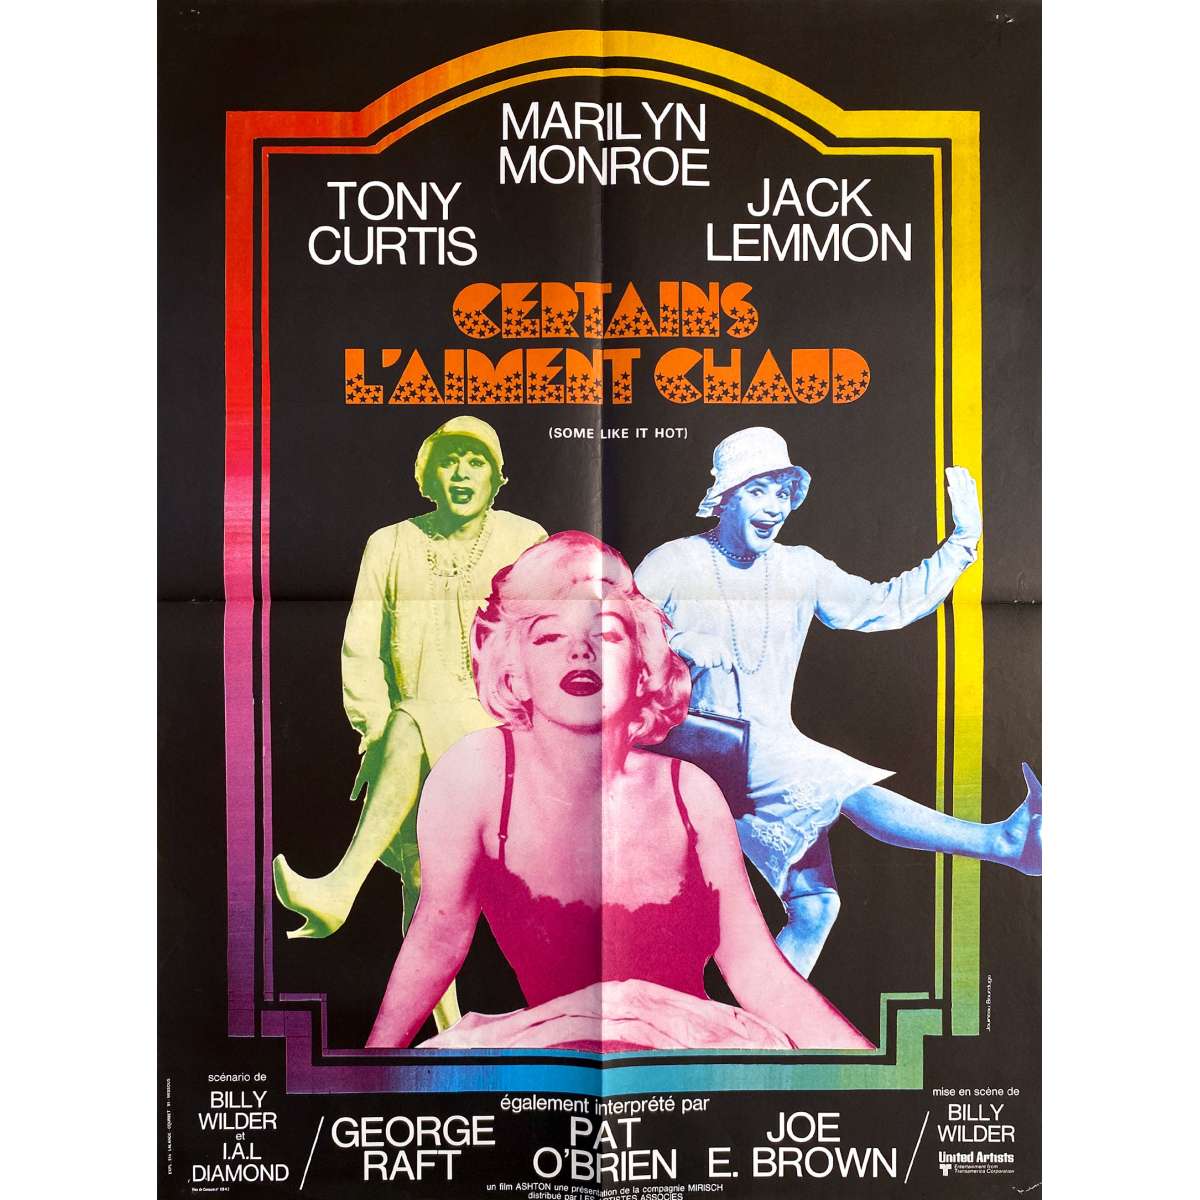 French Vintage Movie